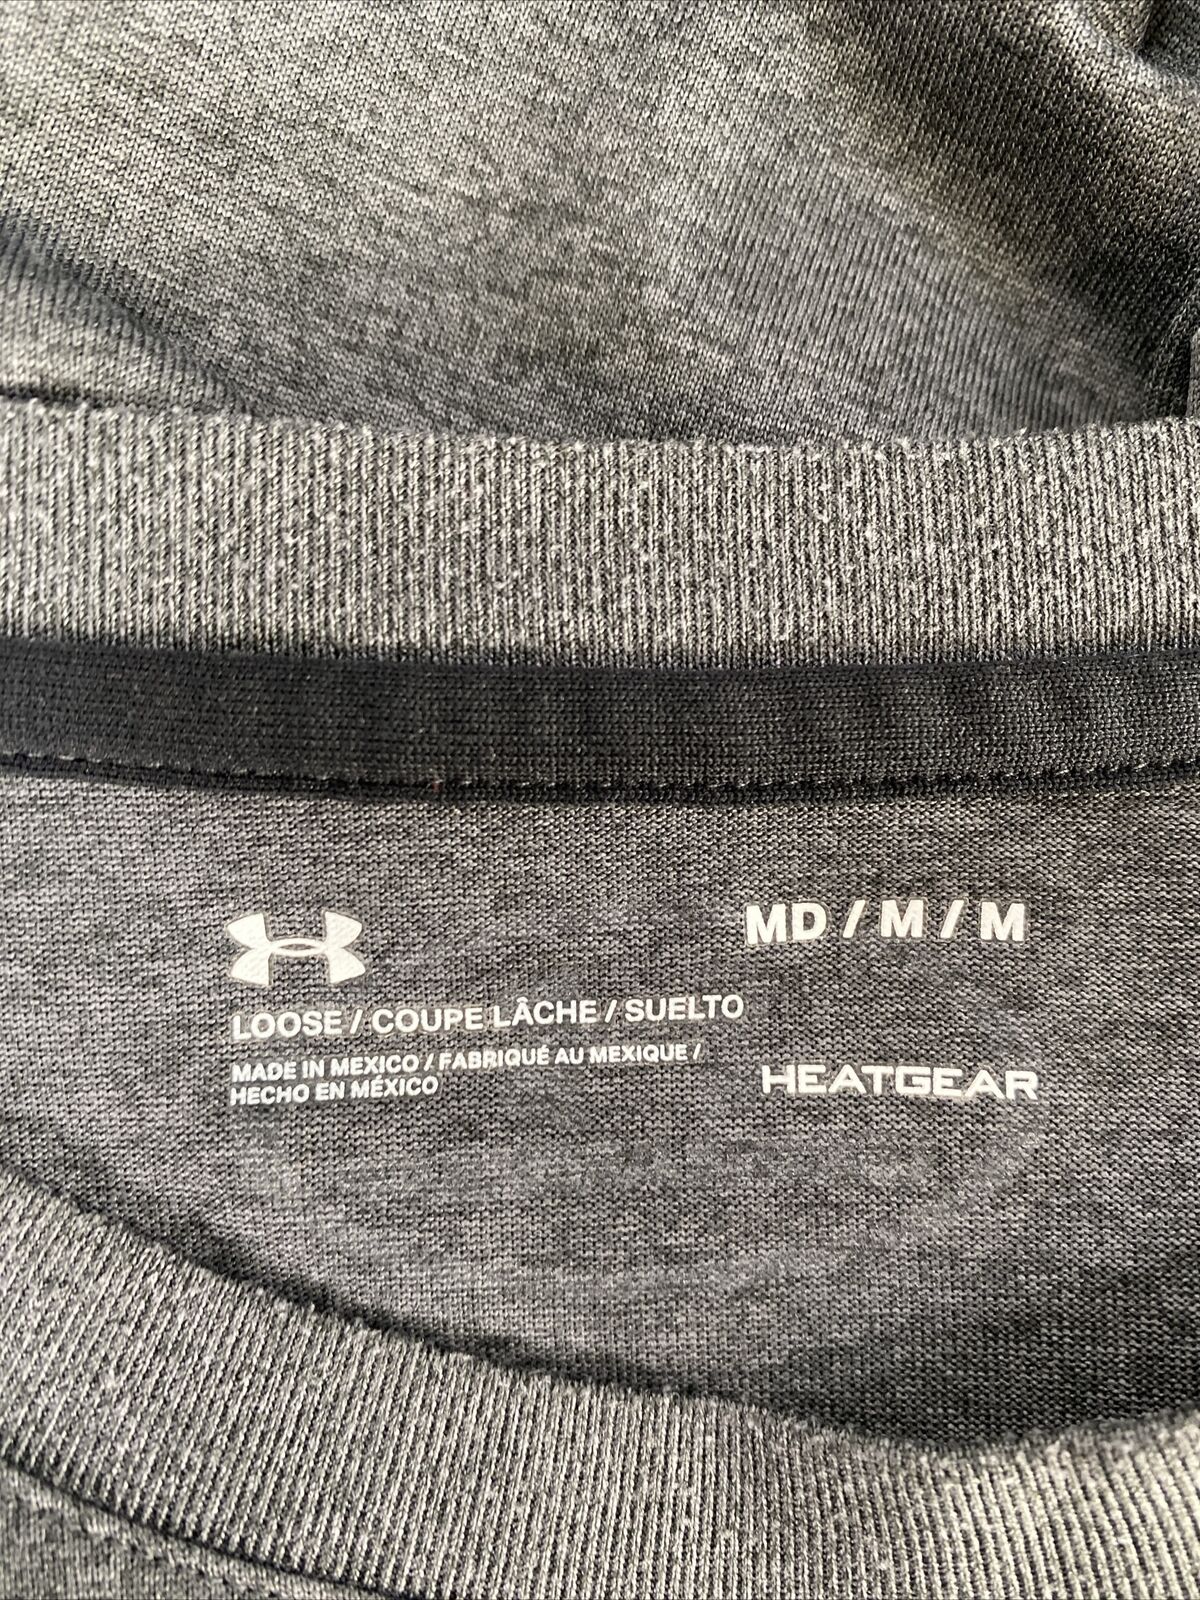 Camiseta deportiva Under Armour HeatGear de manga corta gris para hombre - M